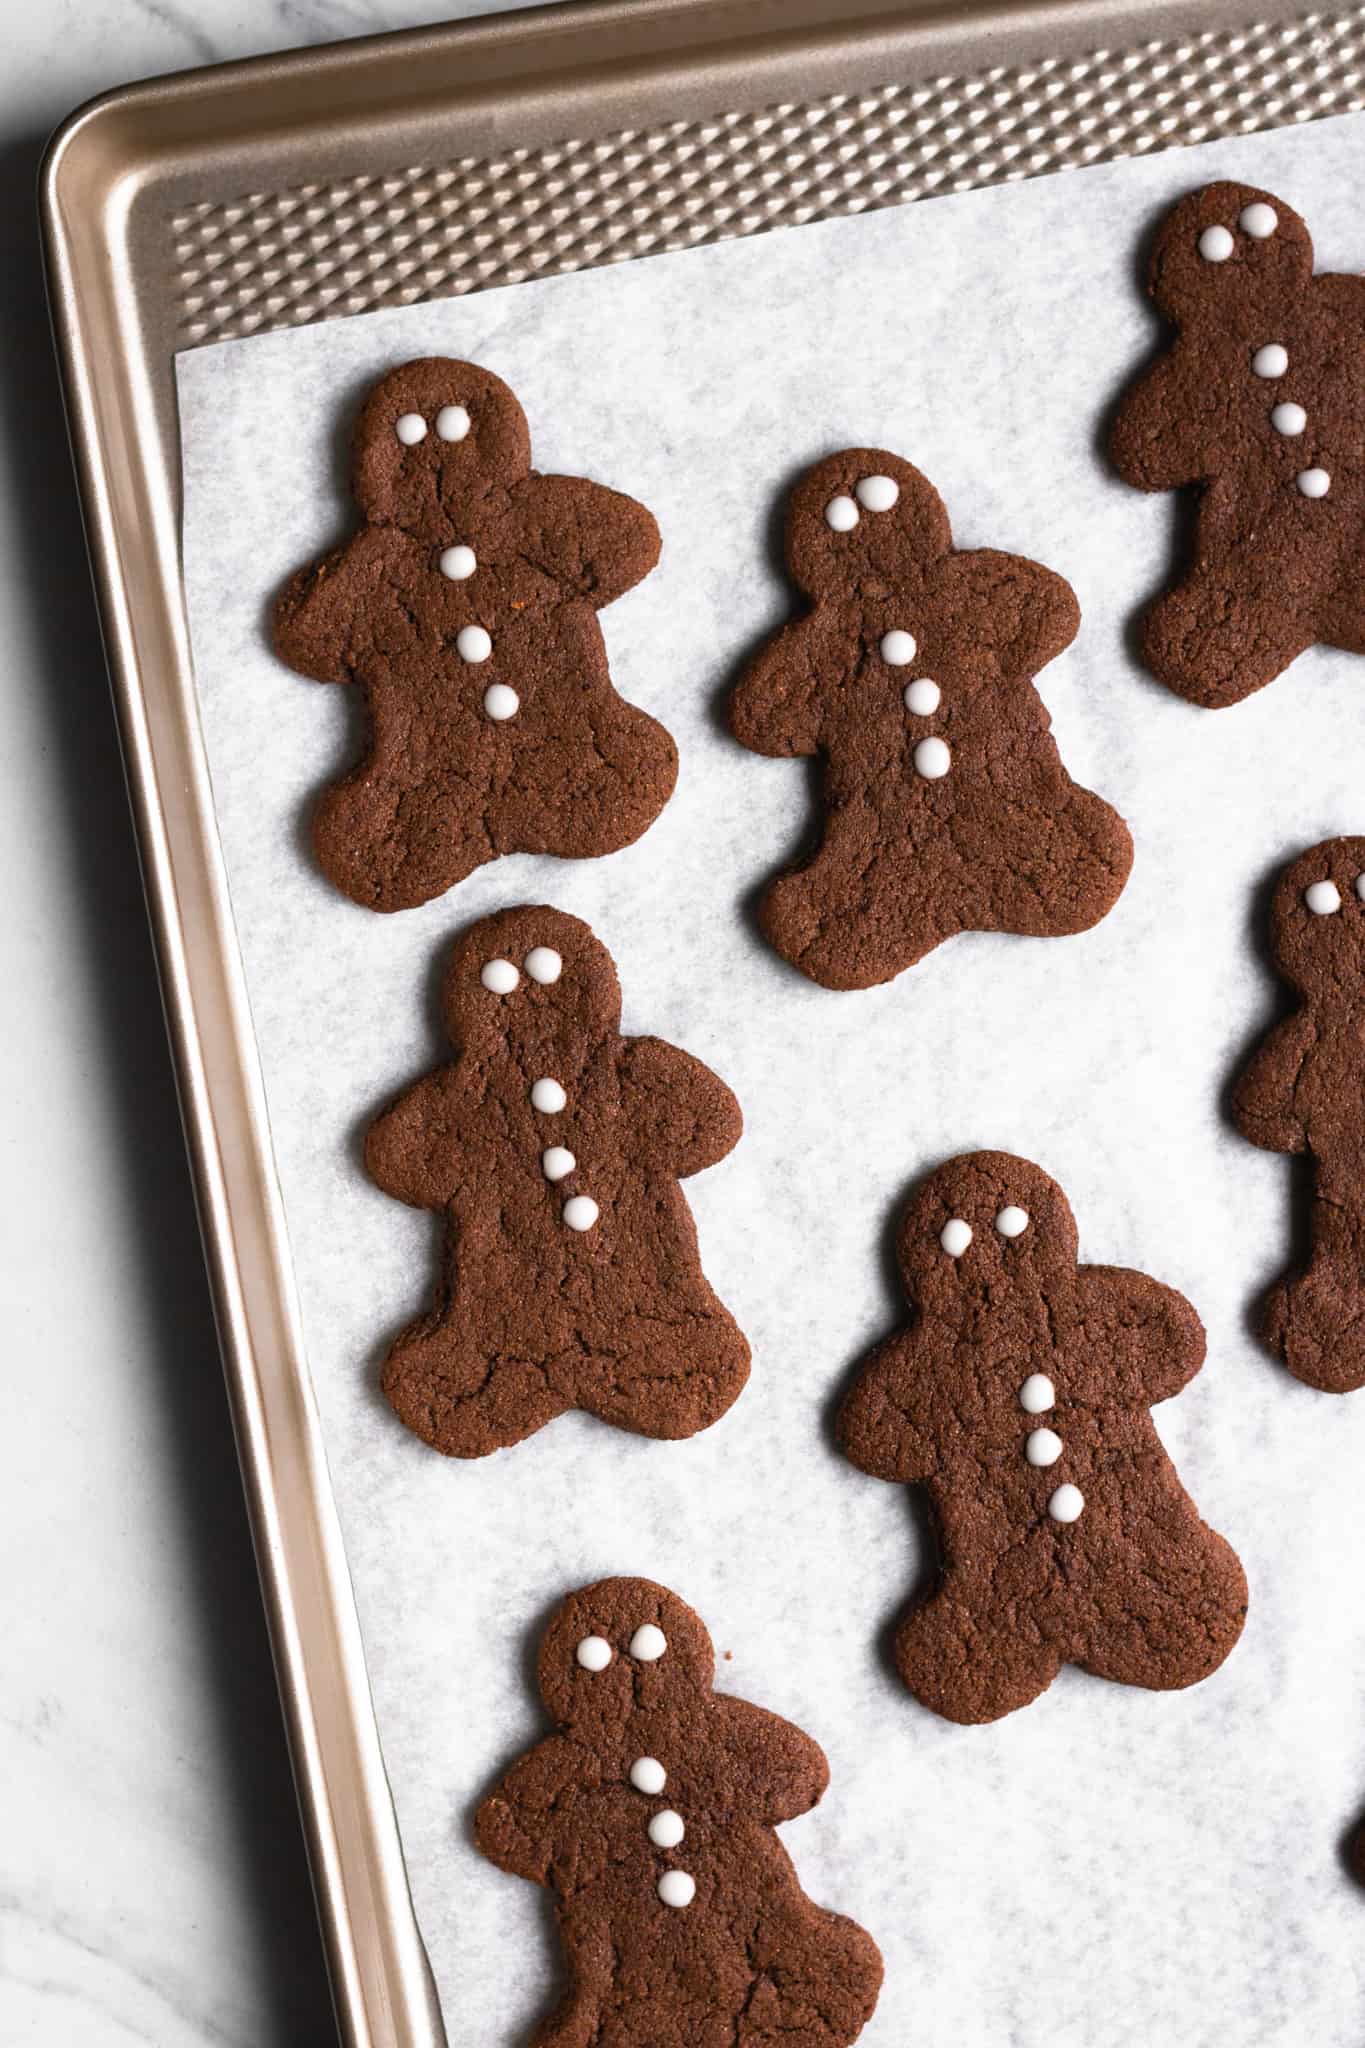 2021 vegan Christmas menu - gingerbread cookies